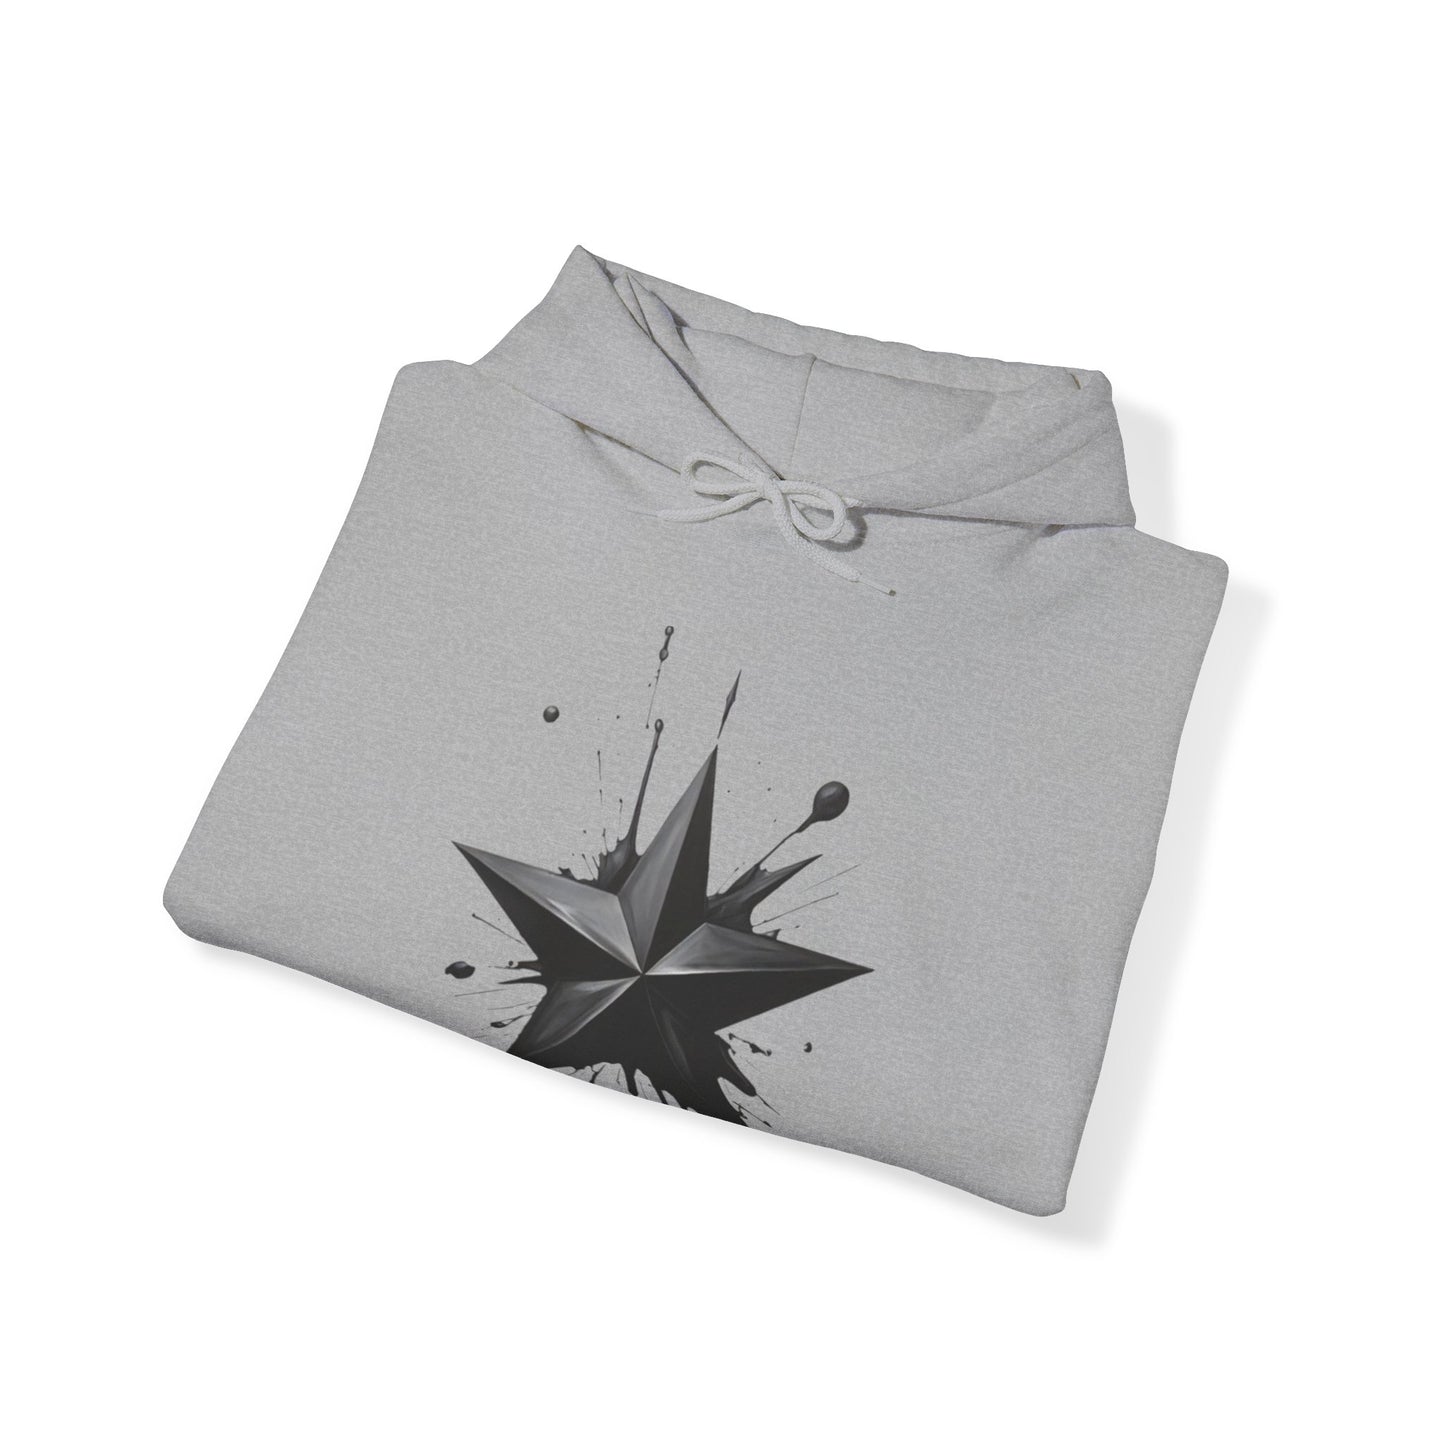 Black Star - Unisex Hooded Sweatshirt